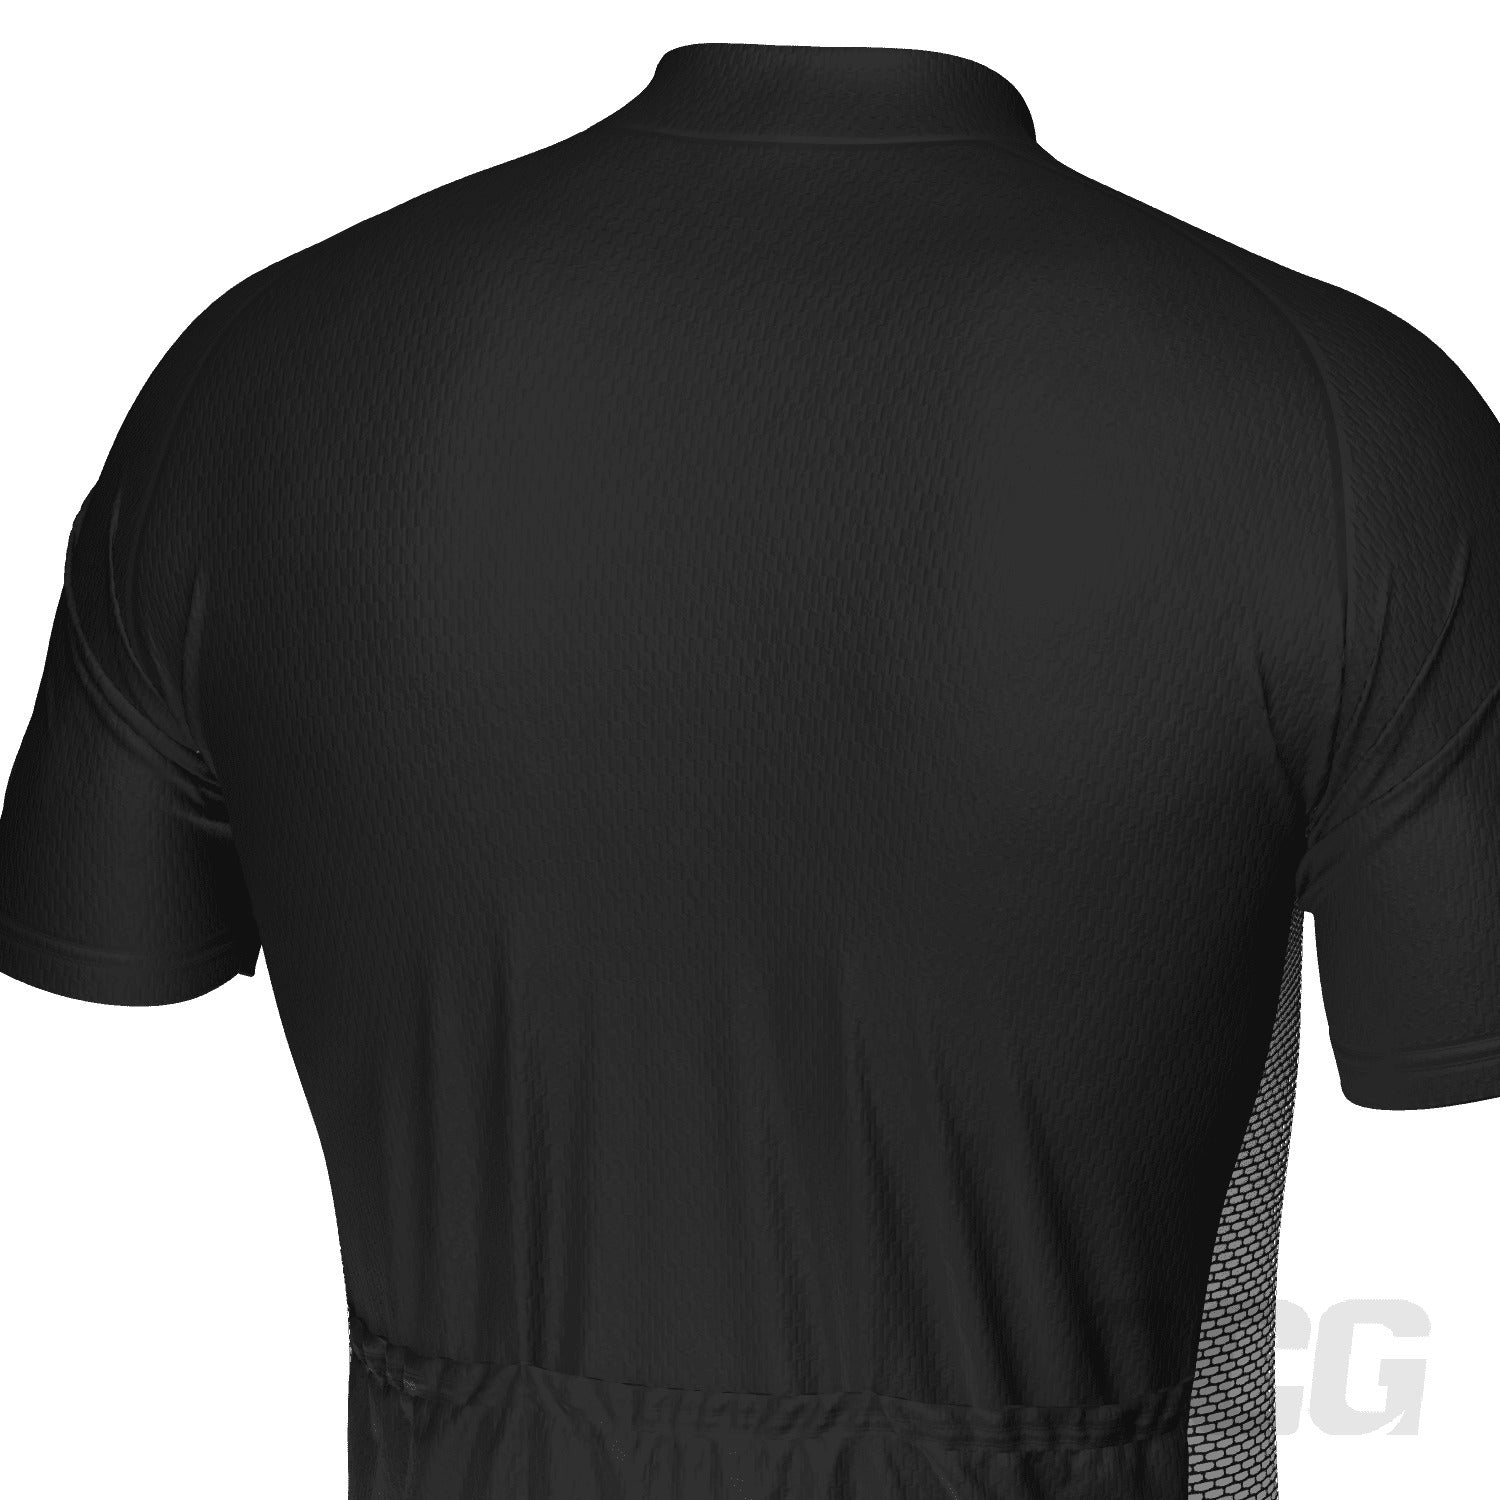 Men's OCG Plain Color Block Short Sleeve Cycling Kit